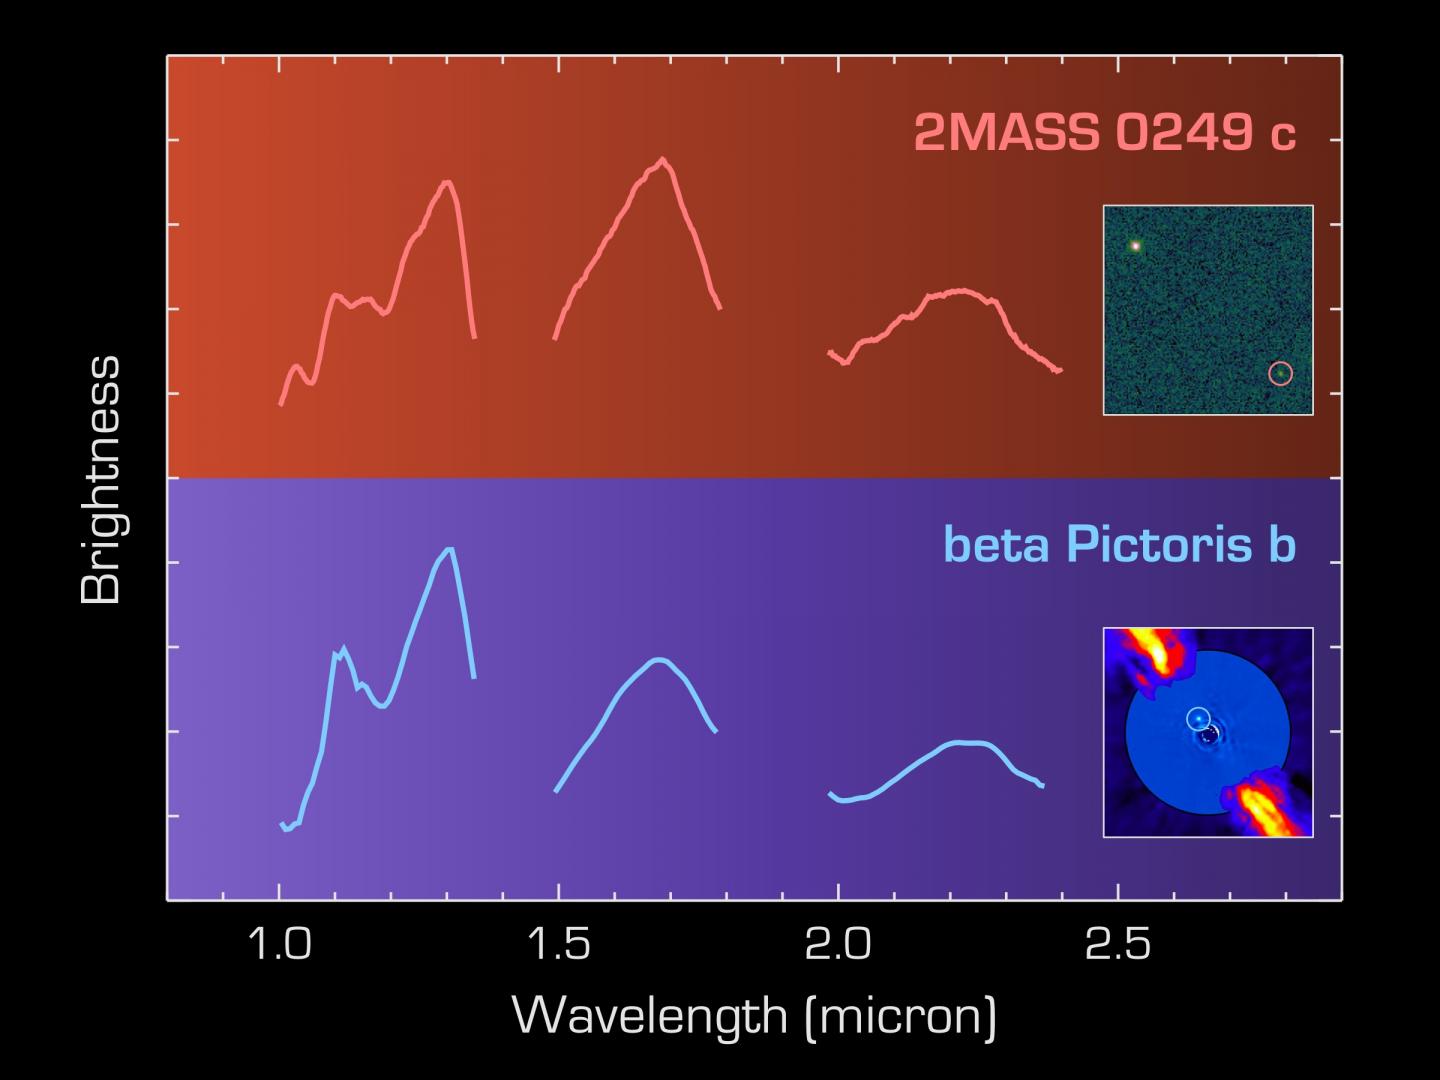 Infrared Spectra of Doppelganger Planets